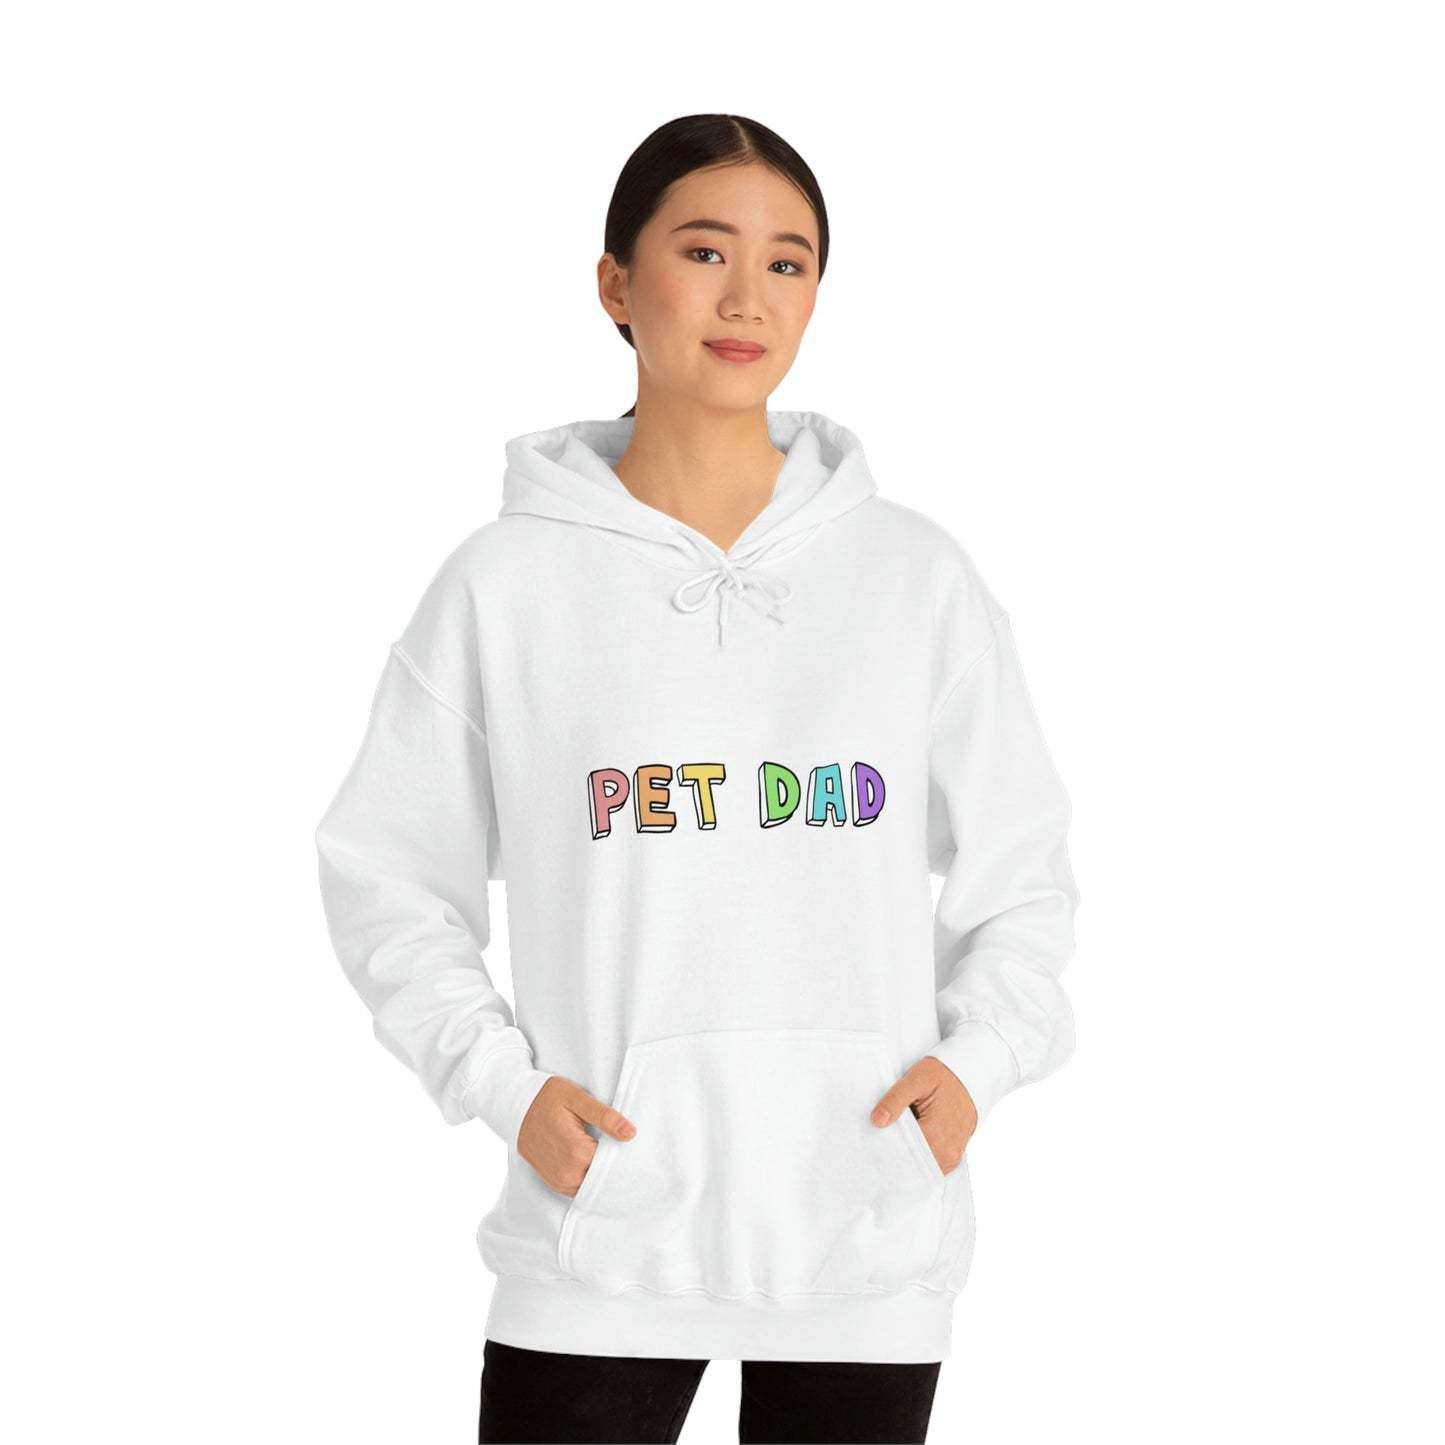 Pet Dad | Hooded Sweatshirt - Detezi Designs-21398668842688341296